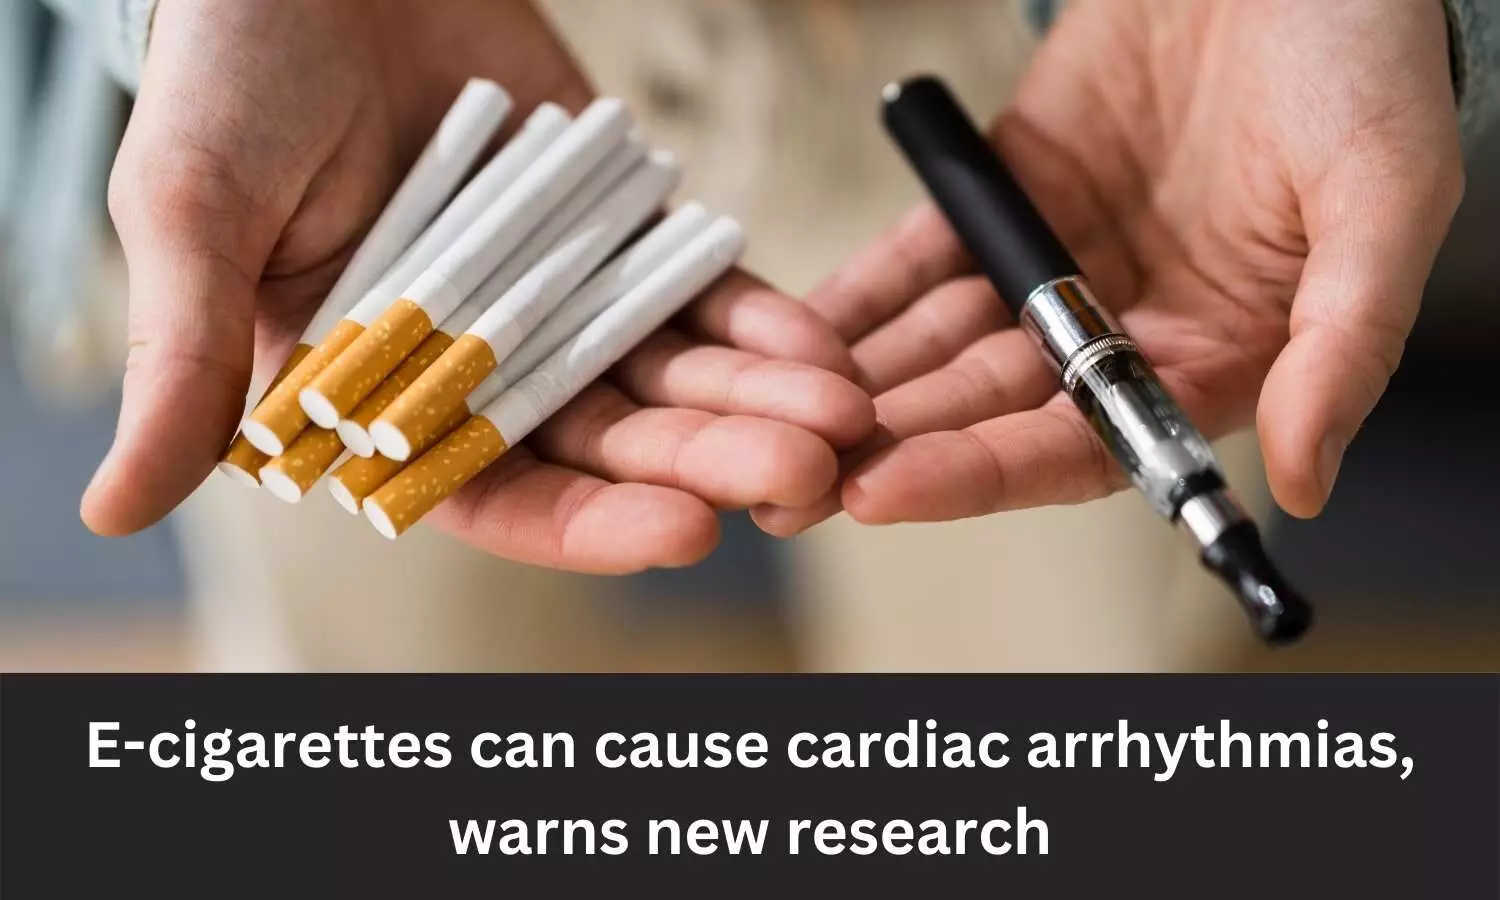 E-cigarettes can cause cardiac arrhythmias, warns new research